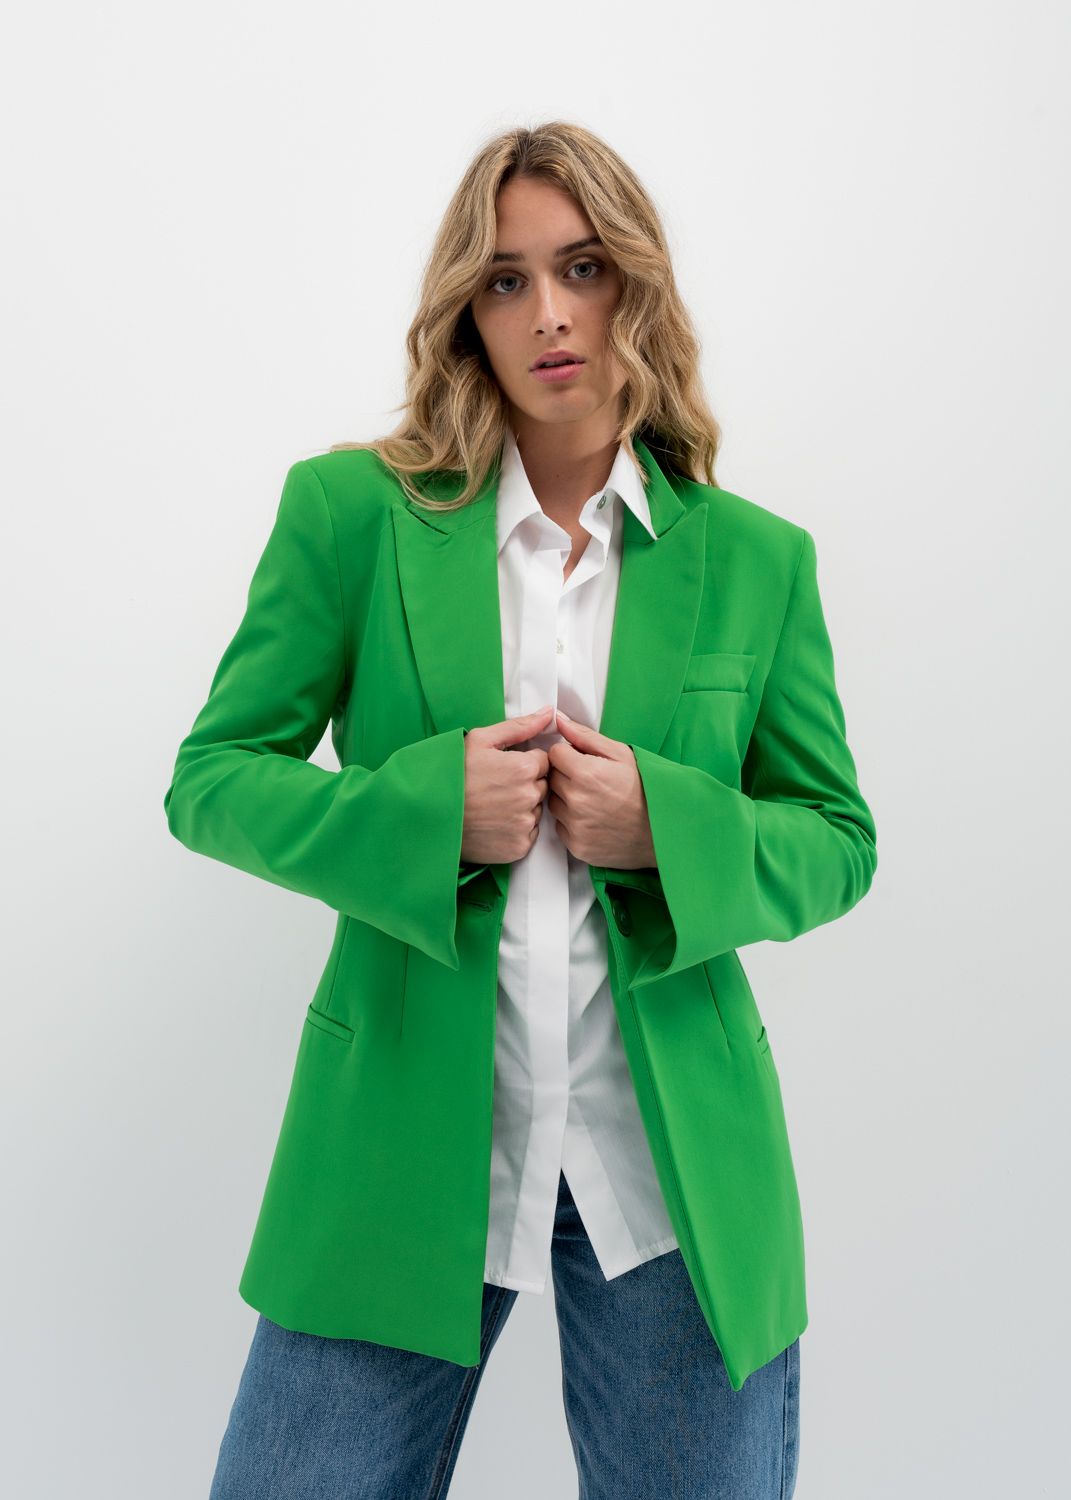 Women's Green Blazer Le Club Elle